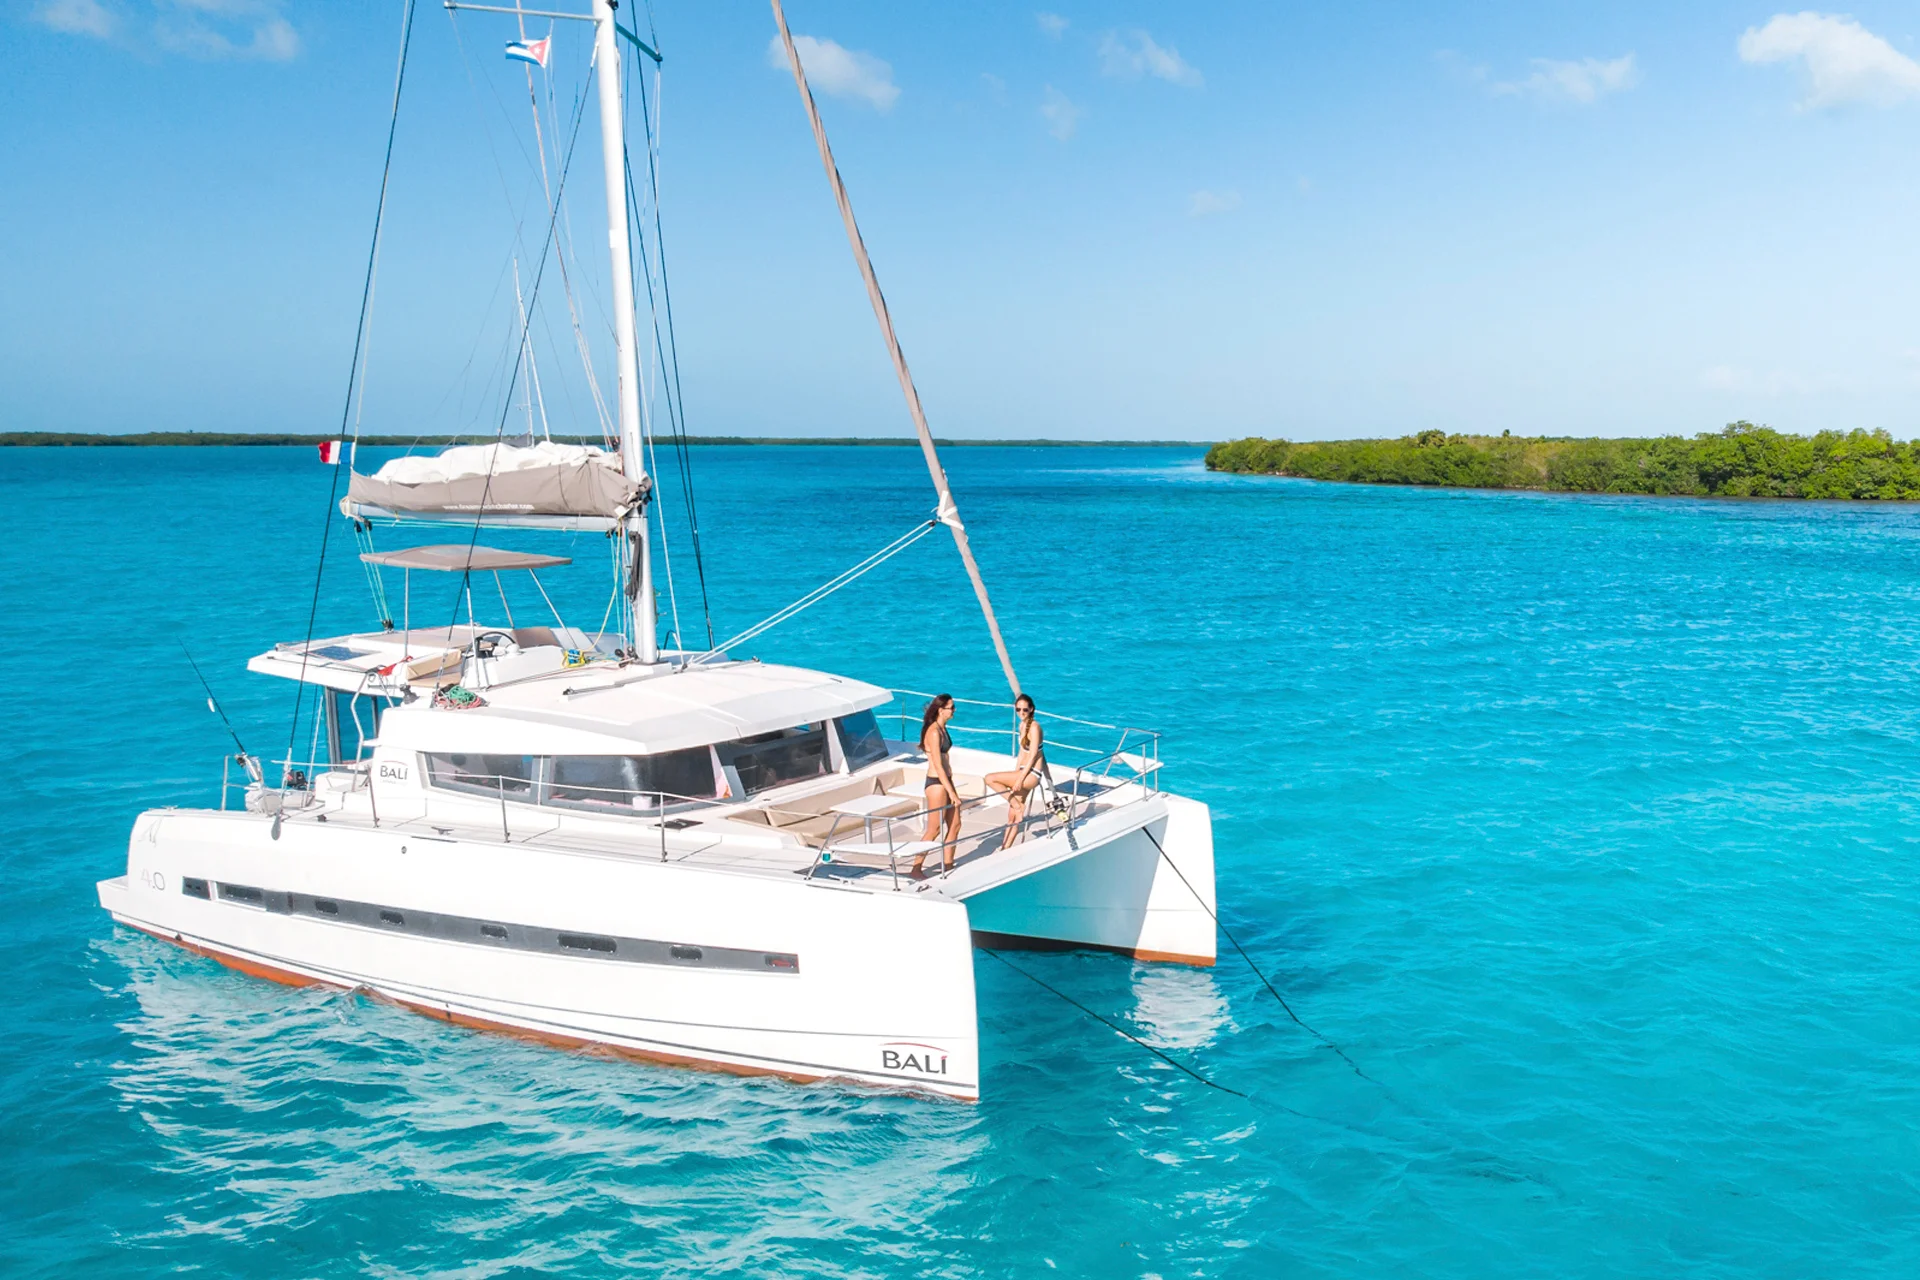 Caribbean yacht charter sailing in blue sea